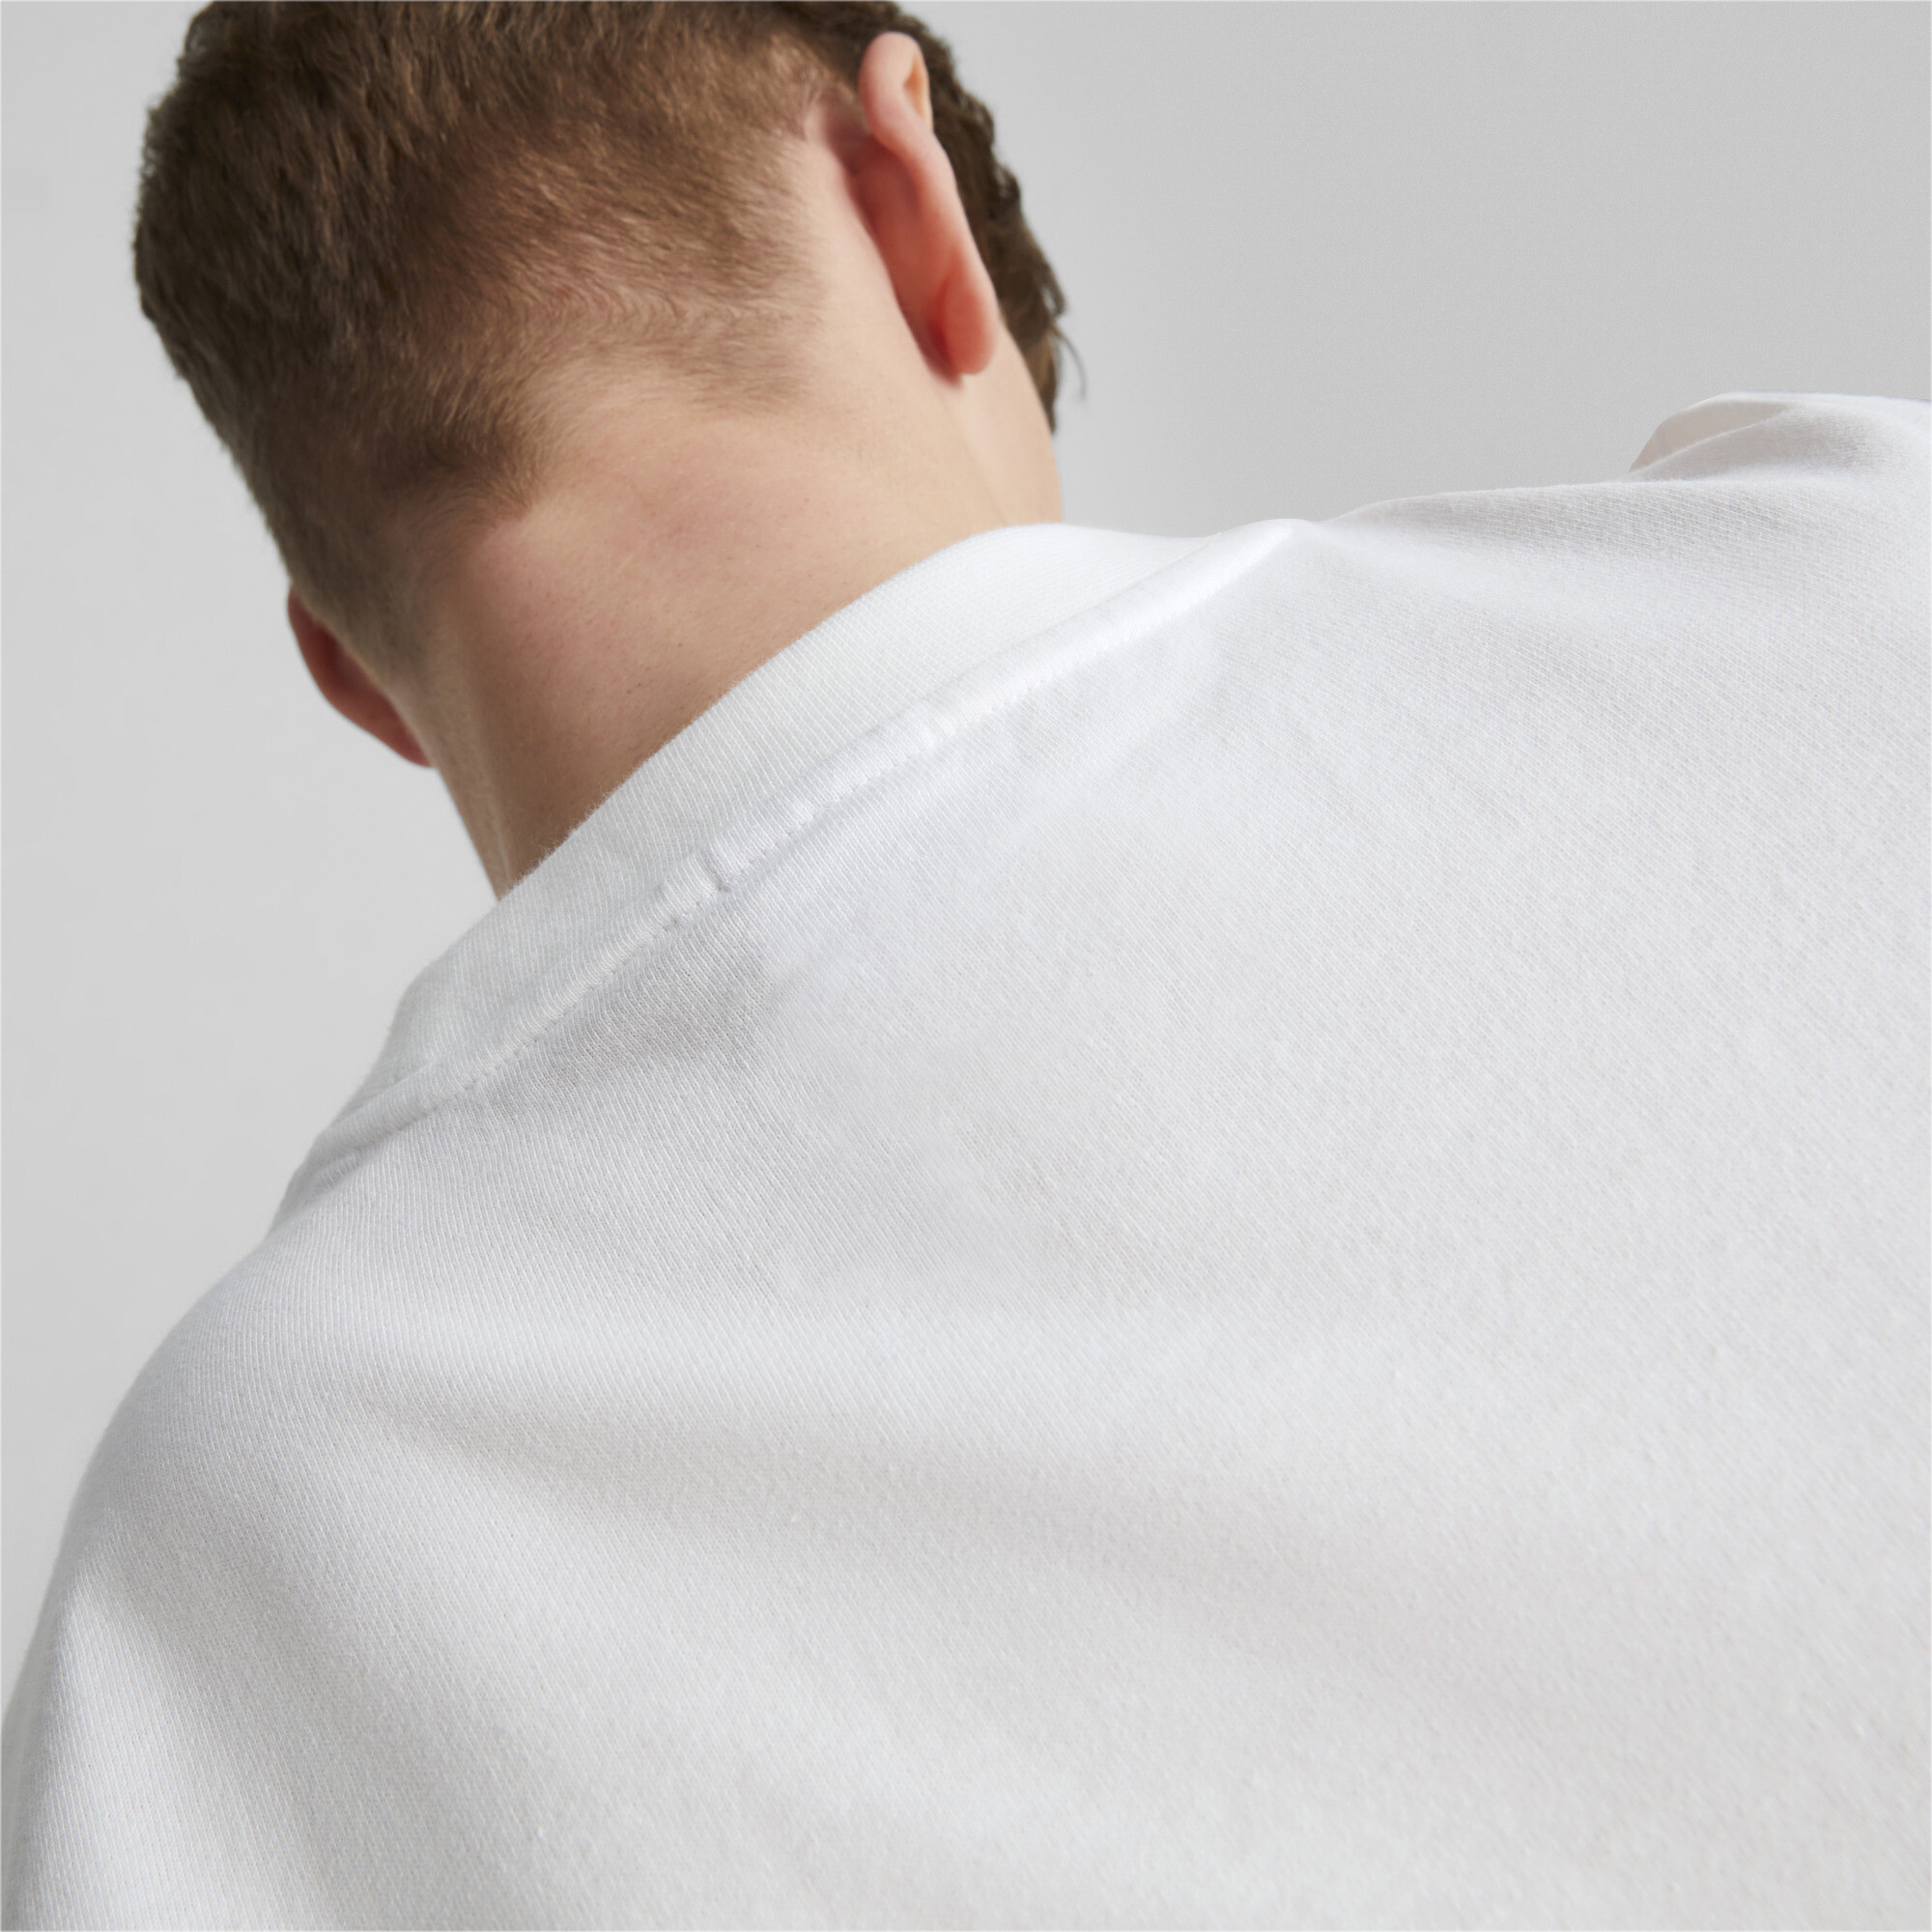 Men's PUMA The NeverWorn II T-Shirt In White, Size XL